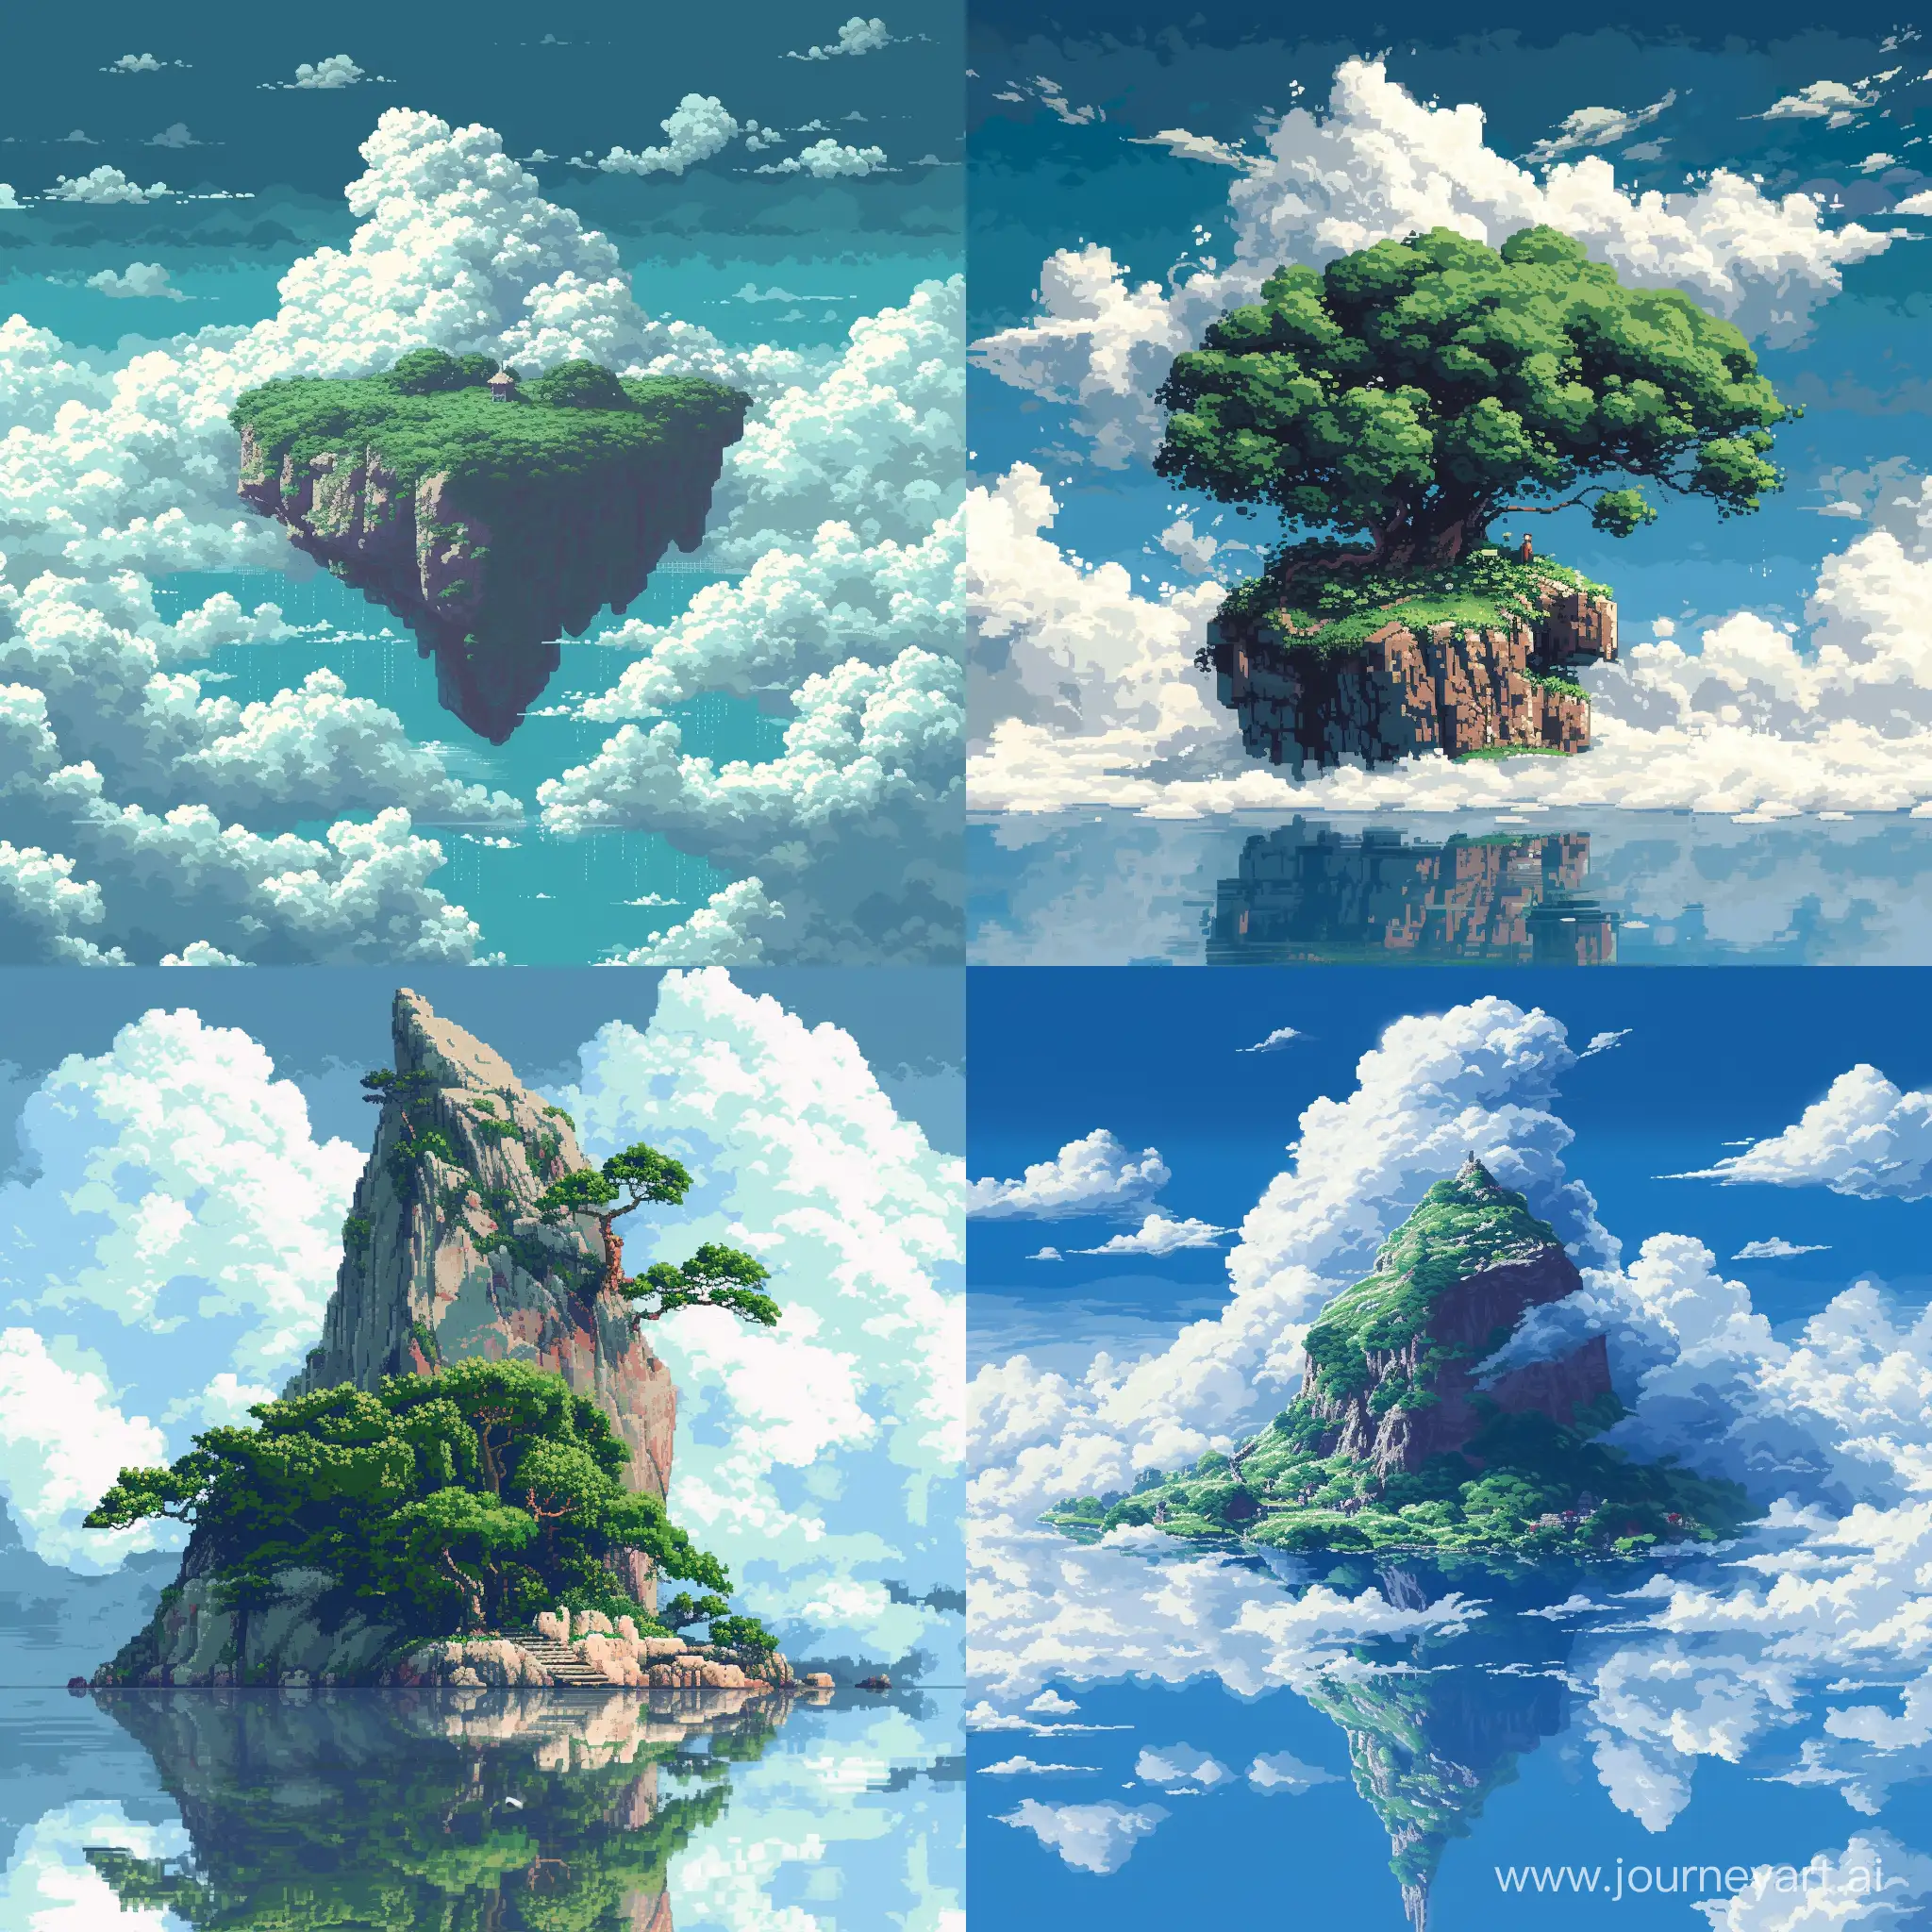 16 bit pixel art, island in the clouds, by studio ghibli, cinematic still, hdr